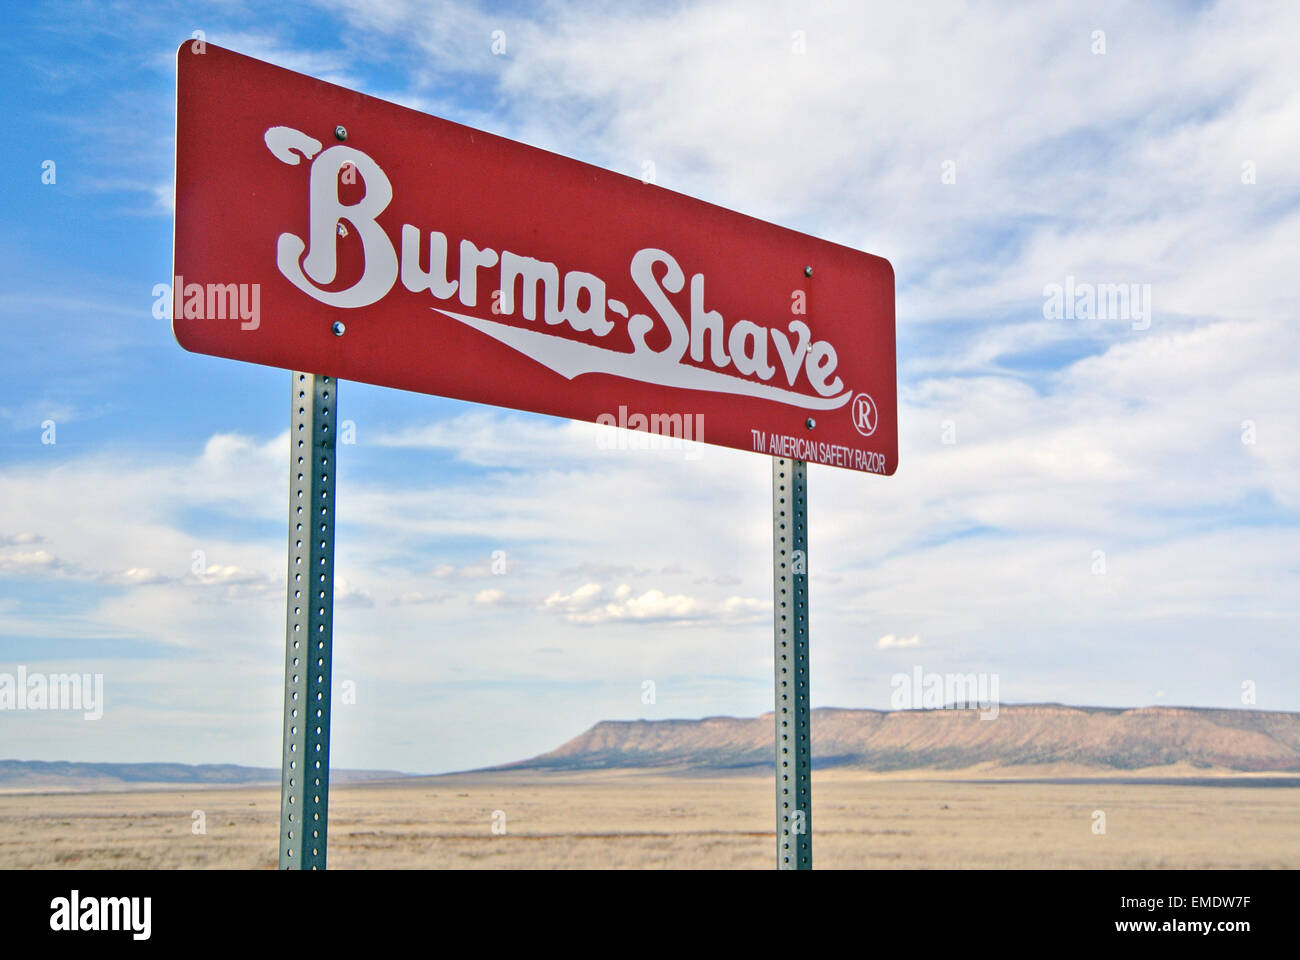 historic burma shave sign on route 66 near Williams Arizona Stock Photo